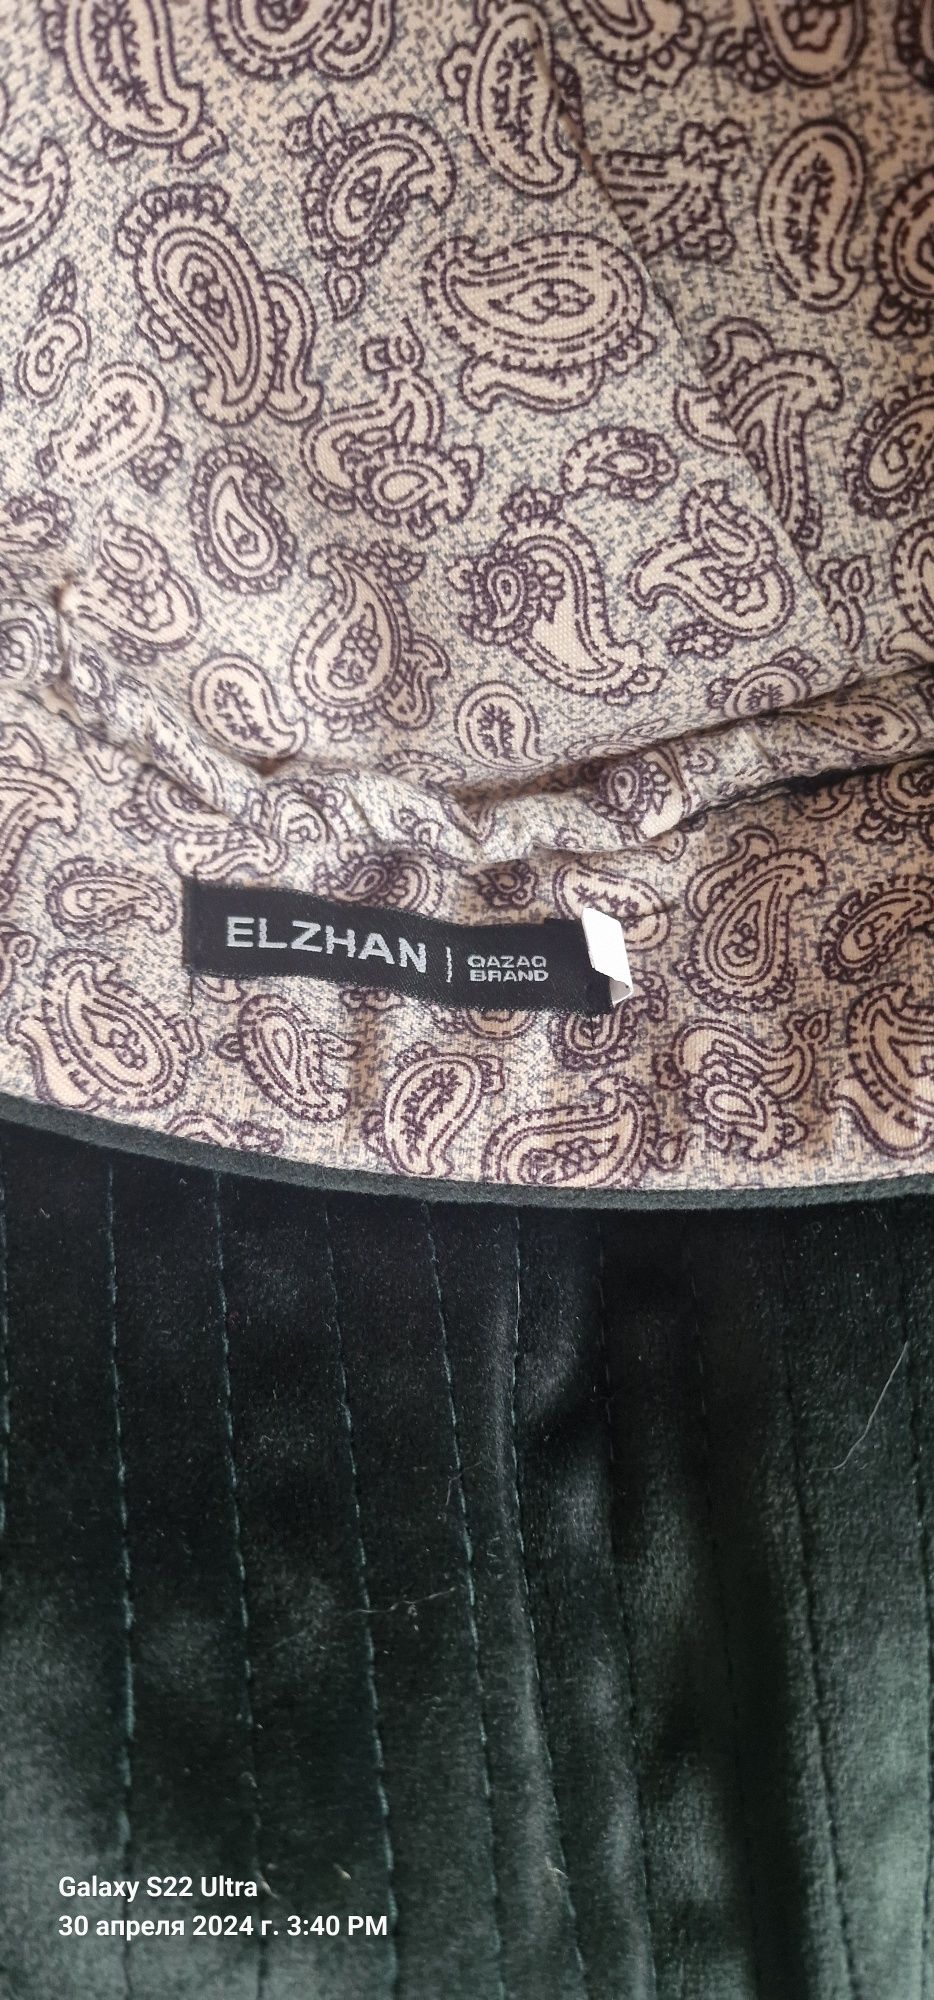 Шапан от бренда "Elzhan"